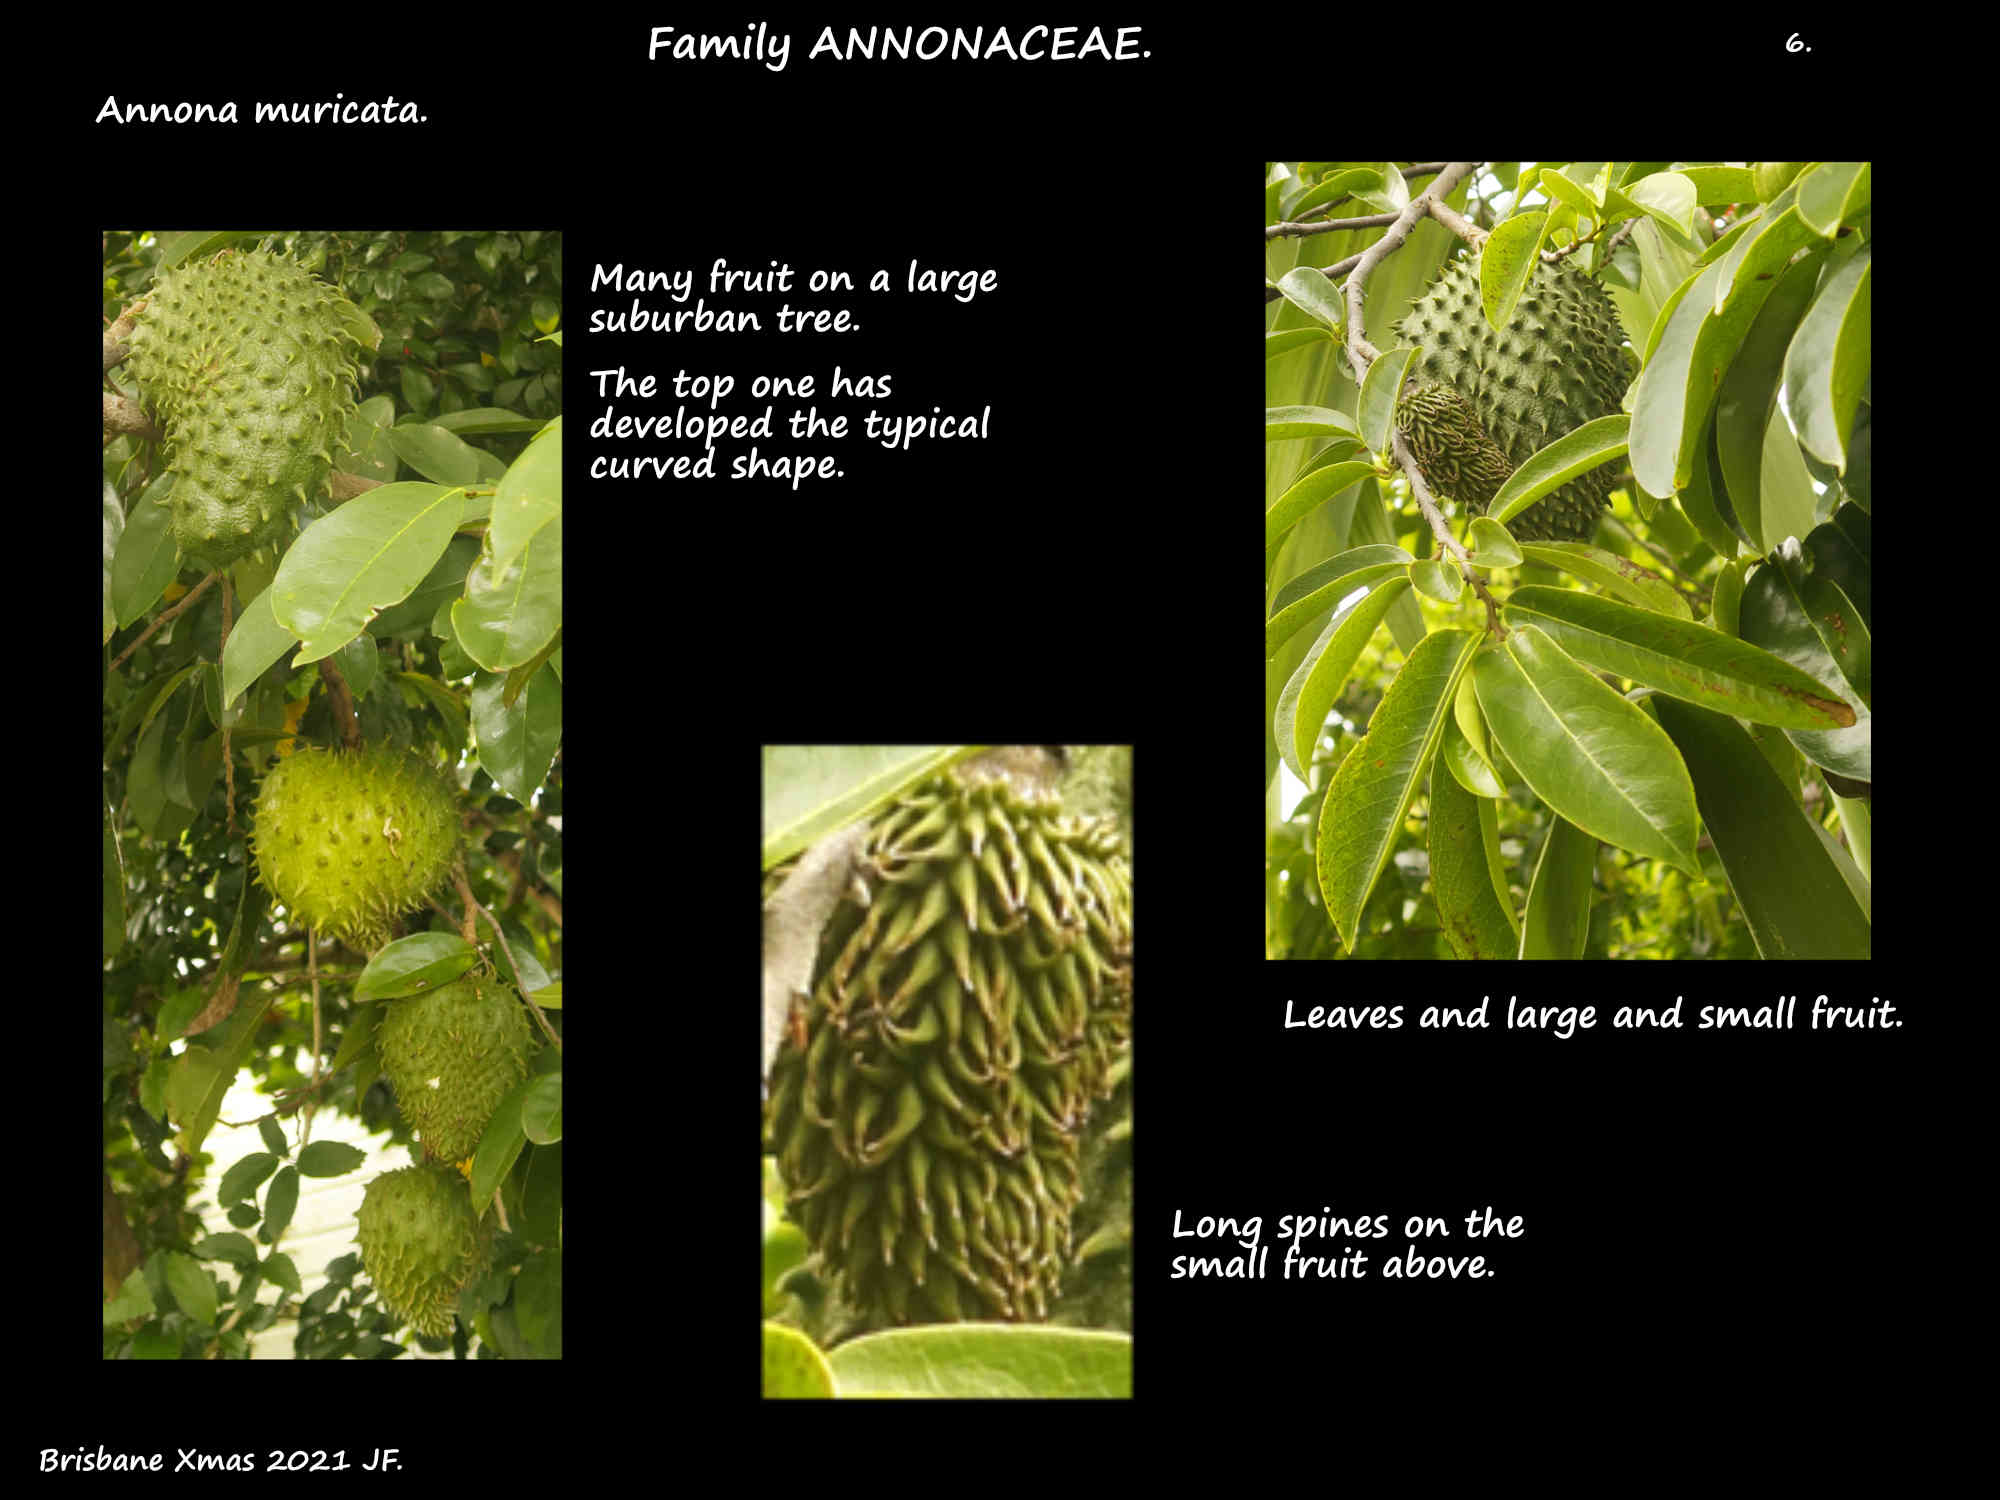 6 Fruit on a large Annona muricata tree